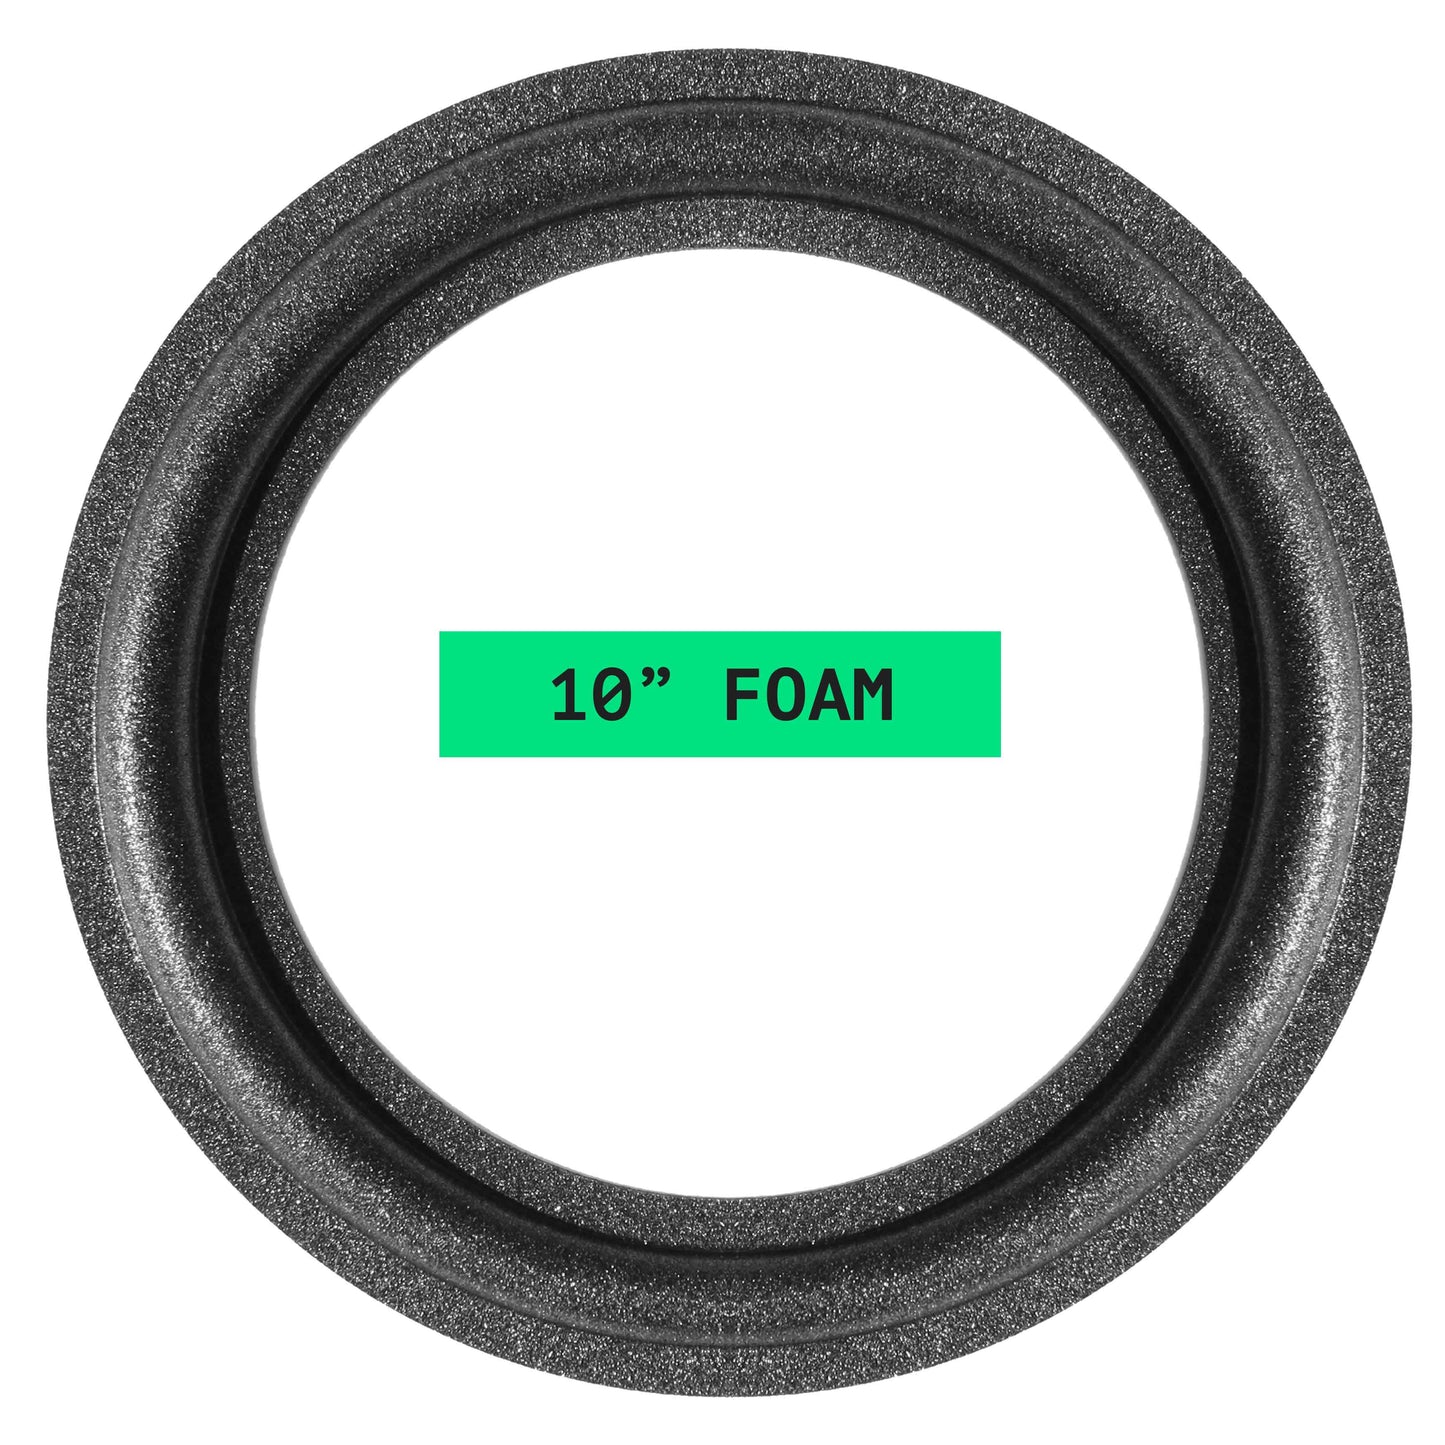 Sony 10" Foam Repair Kit